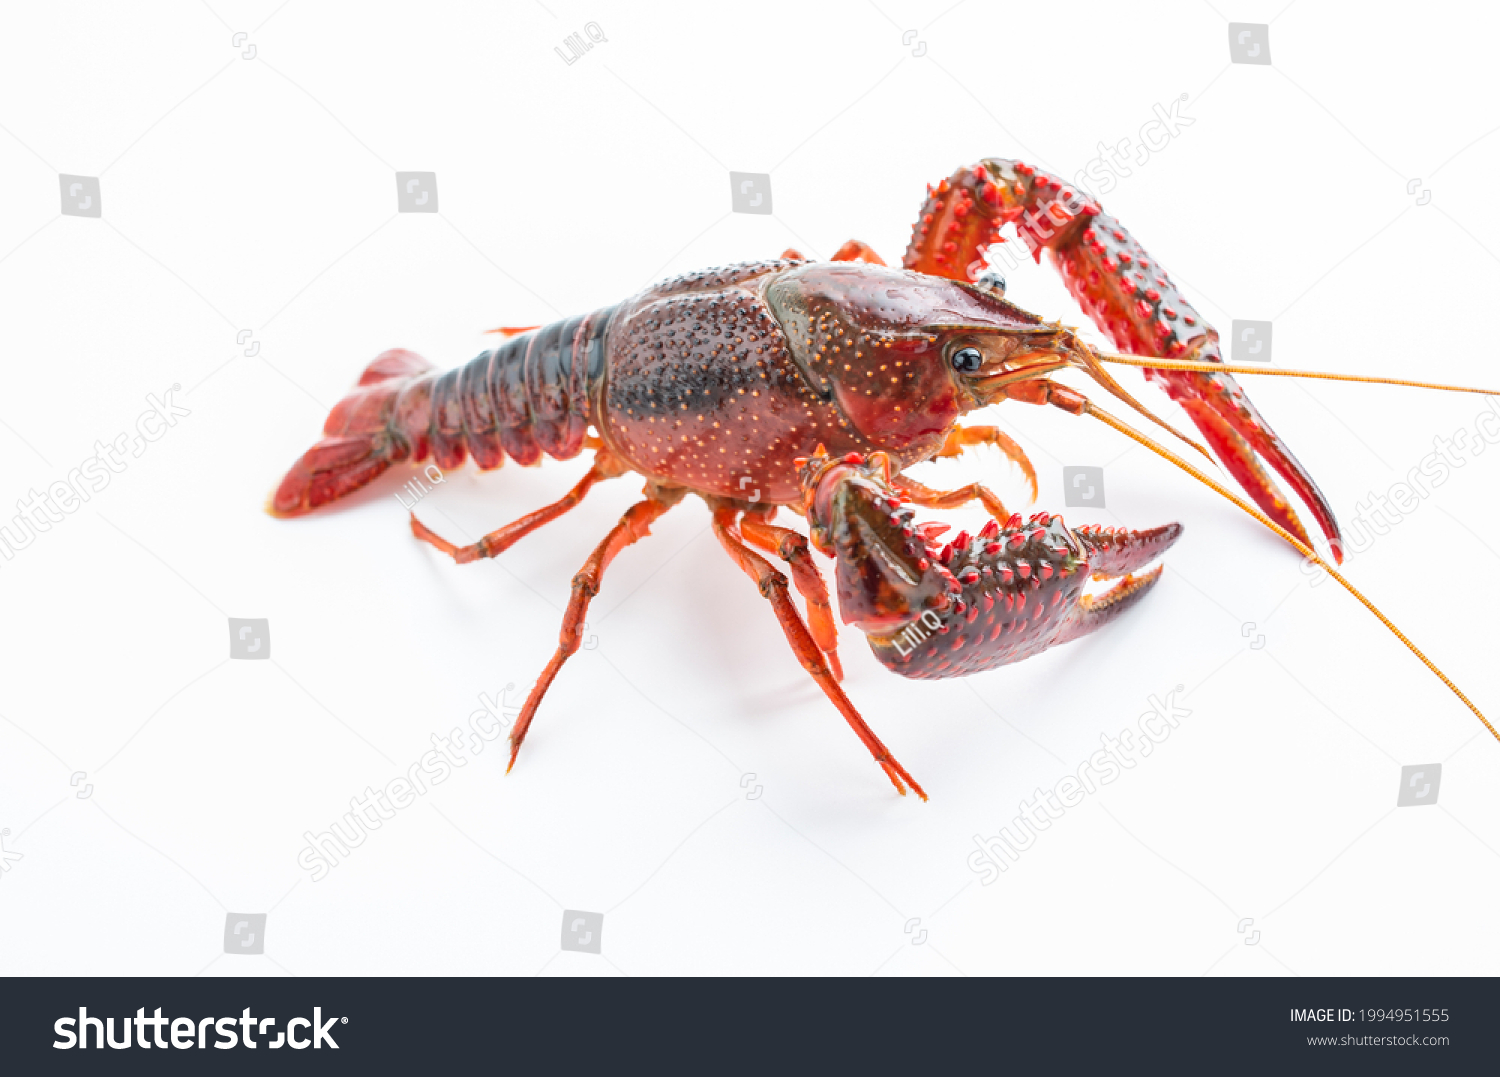 A fresh crayfish on white background #1994951555